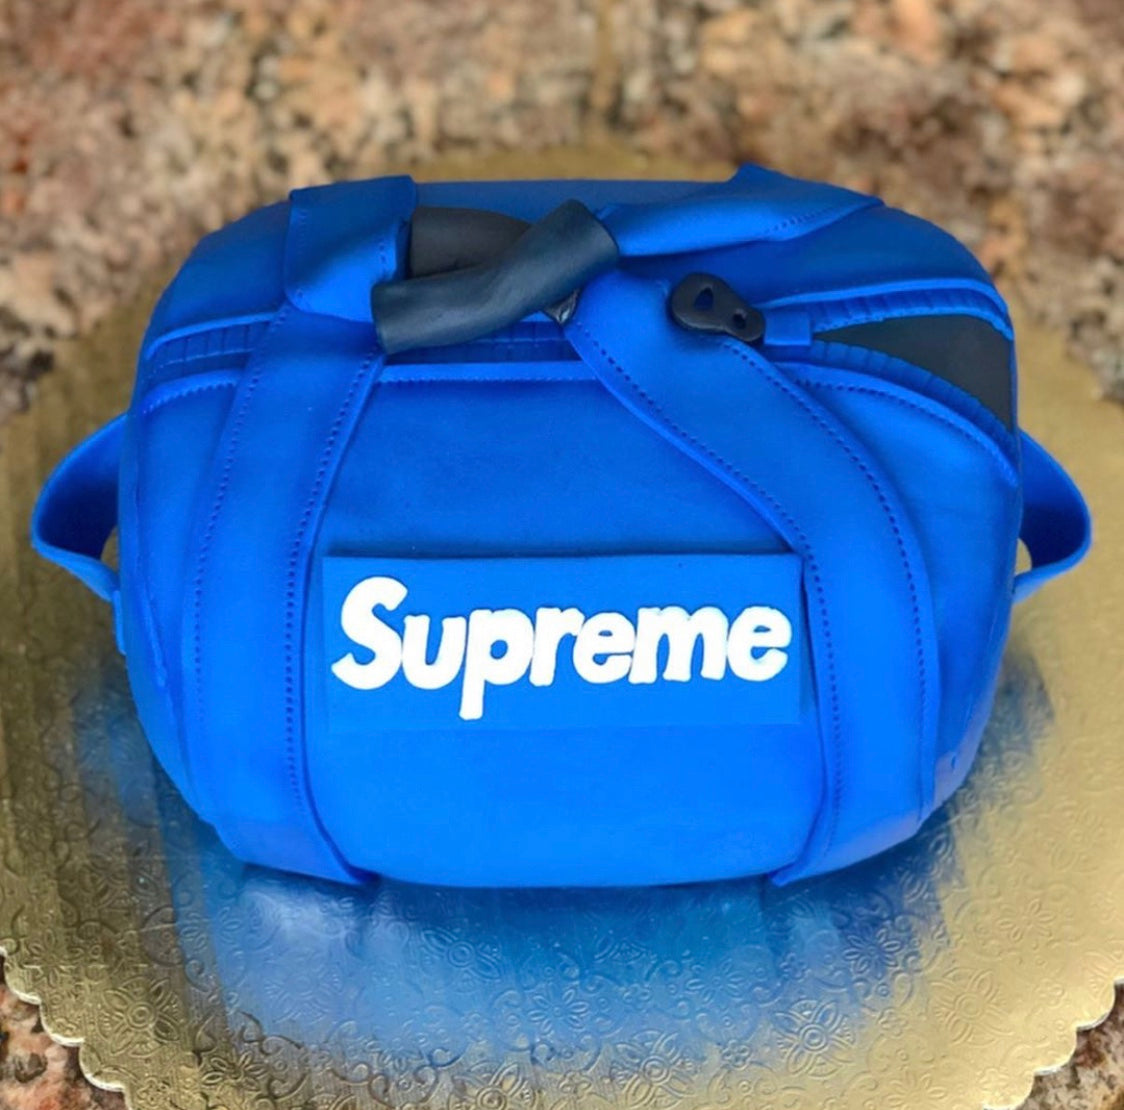 SUPREME Duffle Bag Cake